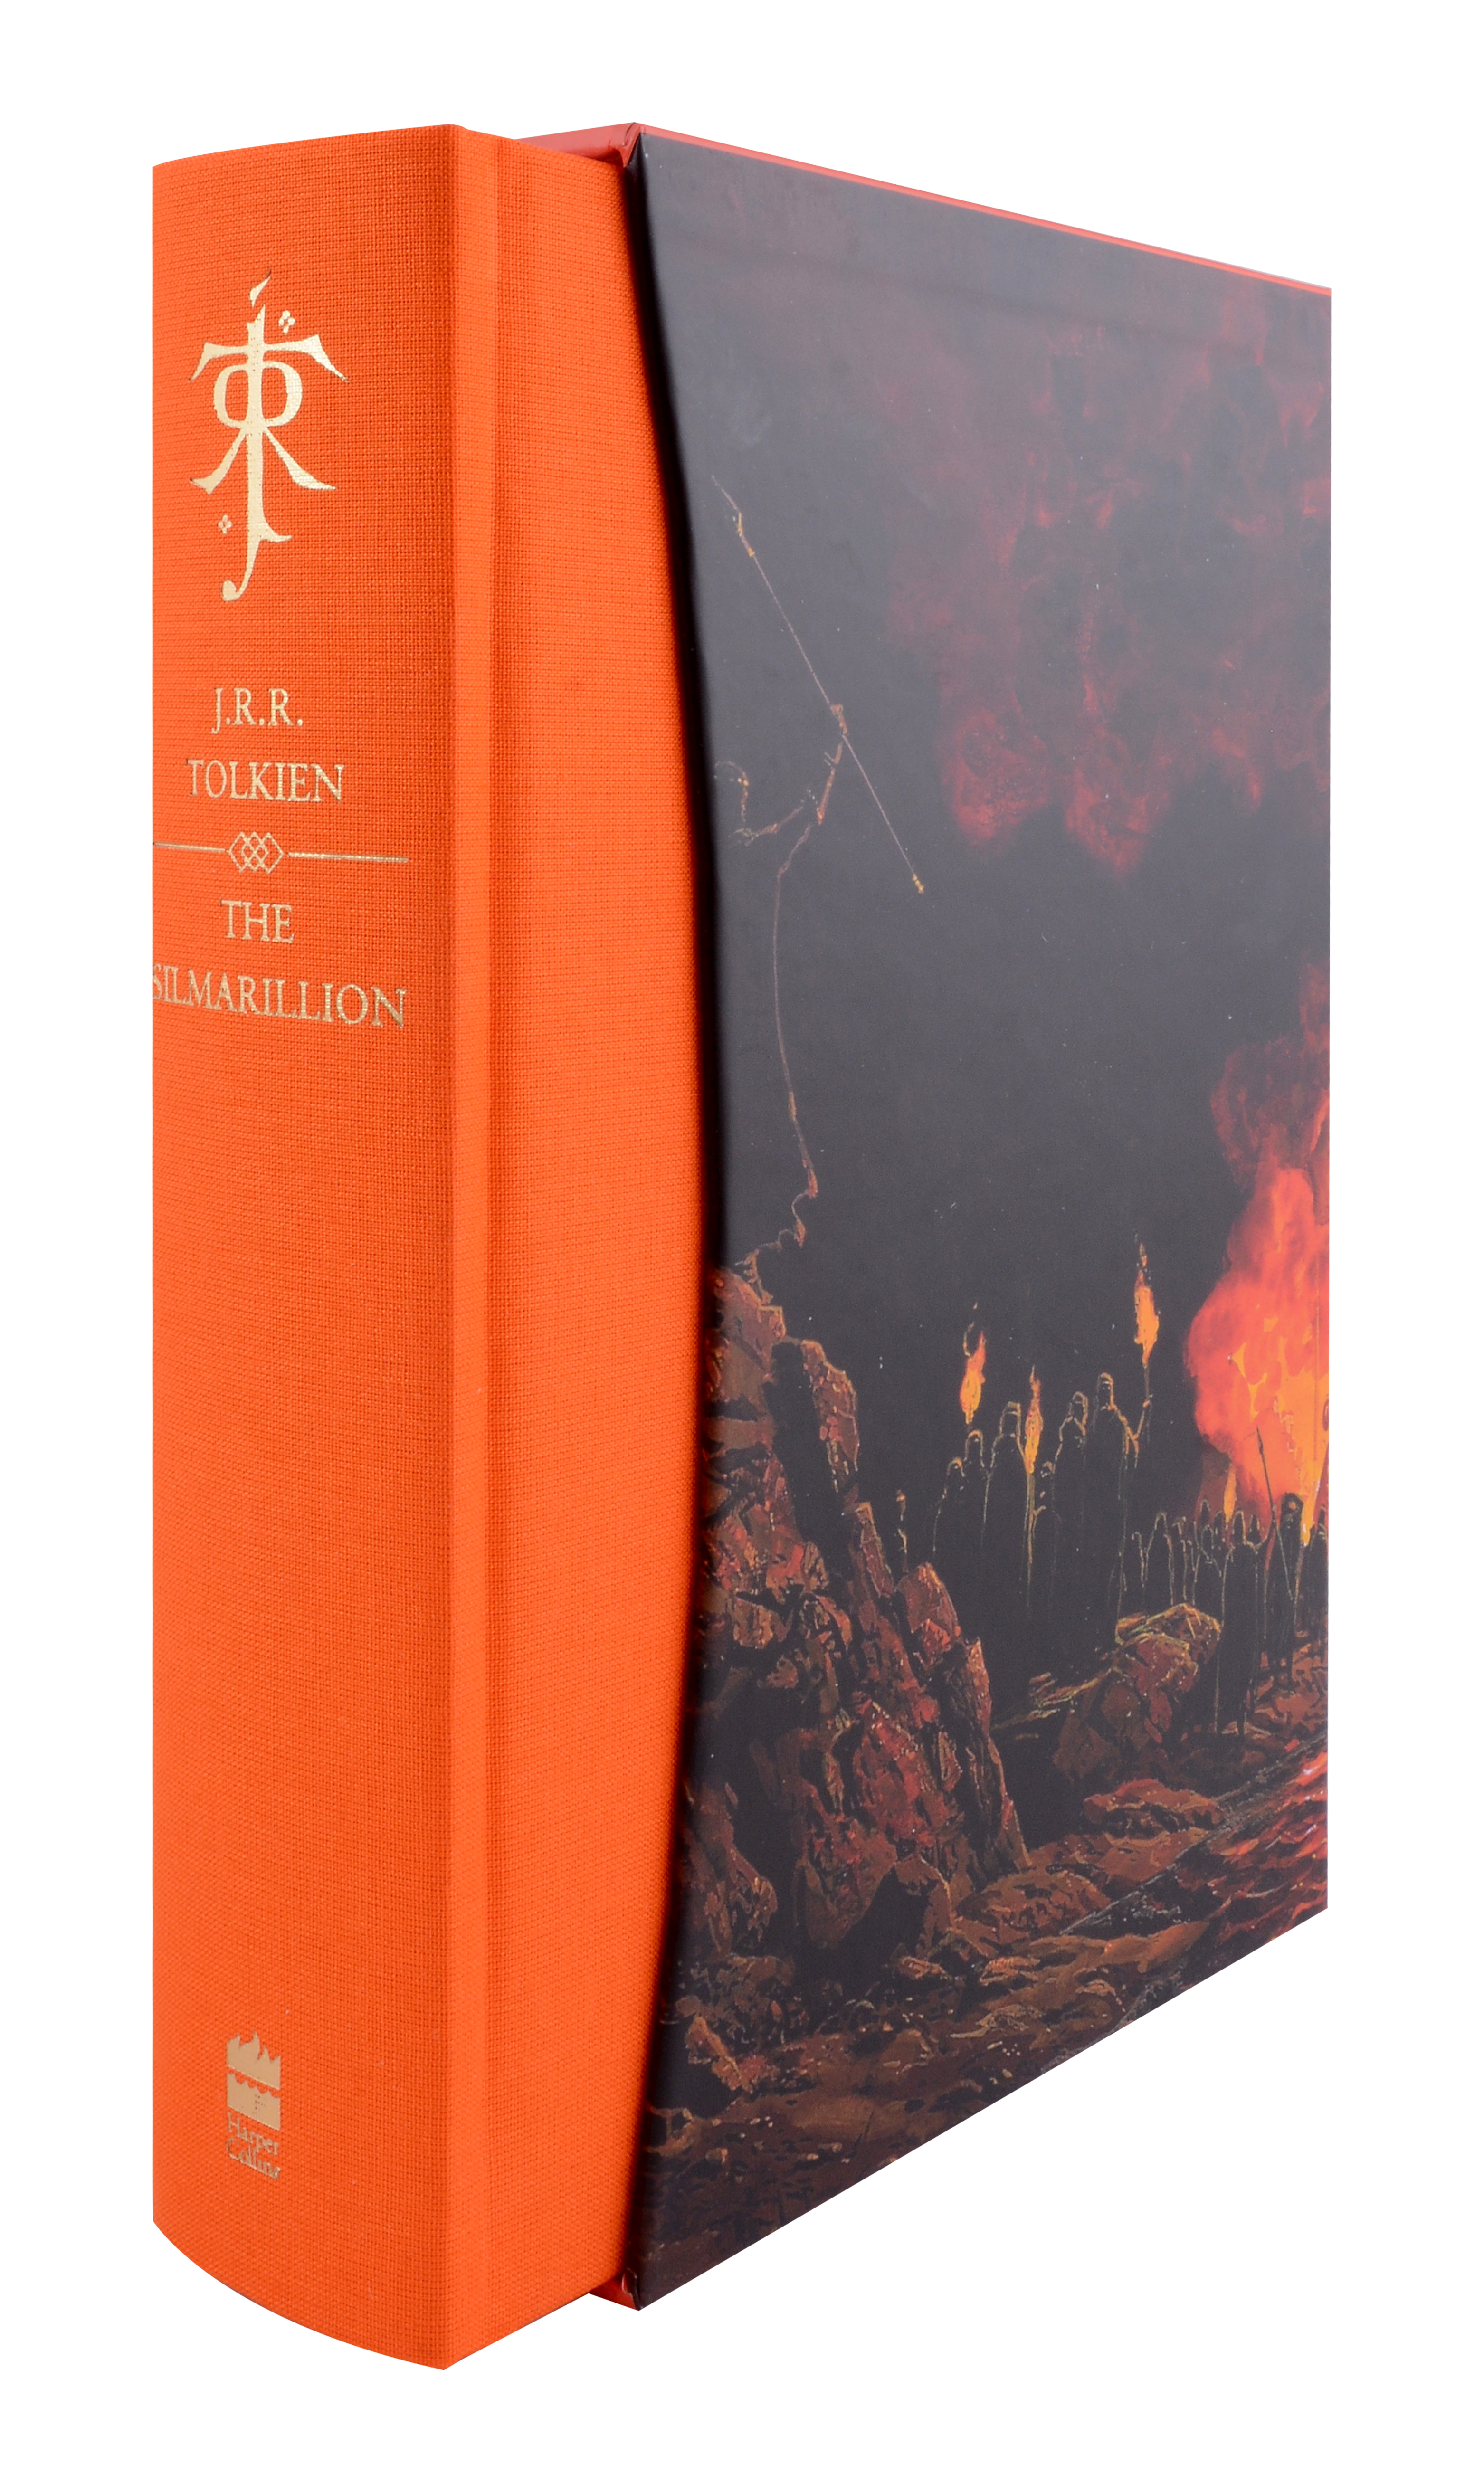 Толкин Джон Рональд Руэл Silmarillion illustrated ed box twenty one pilots scaled and icy cd [digipak booklet housed in a full colour] original 1st edition 2021